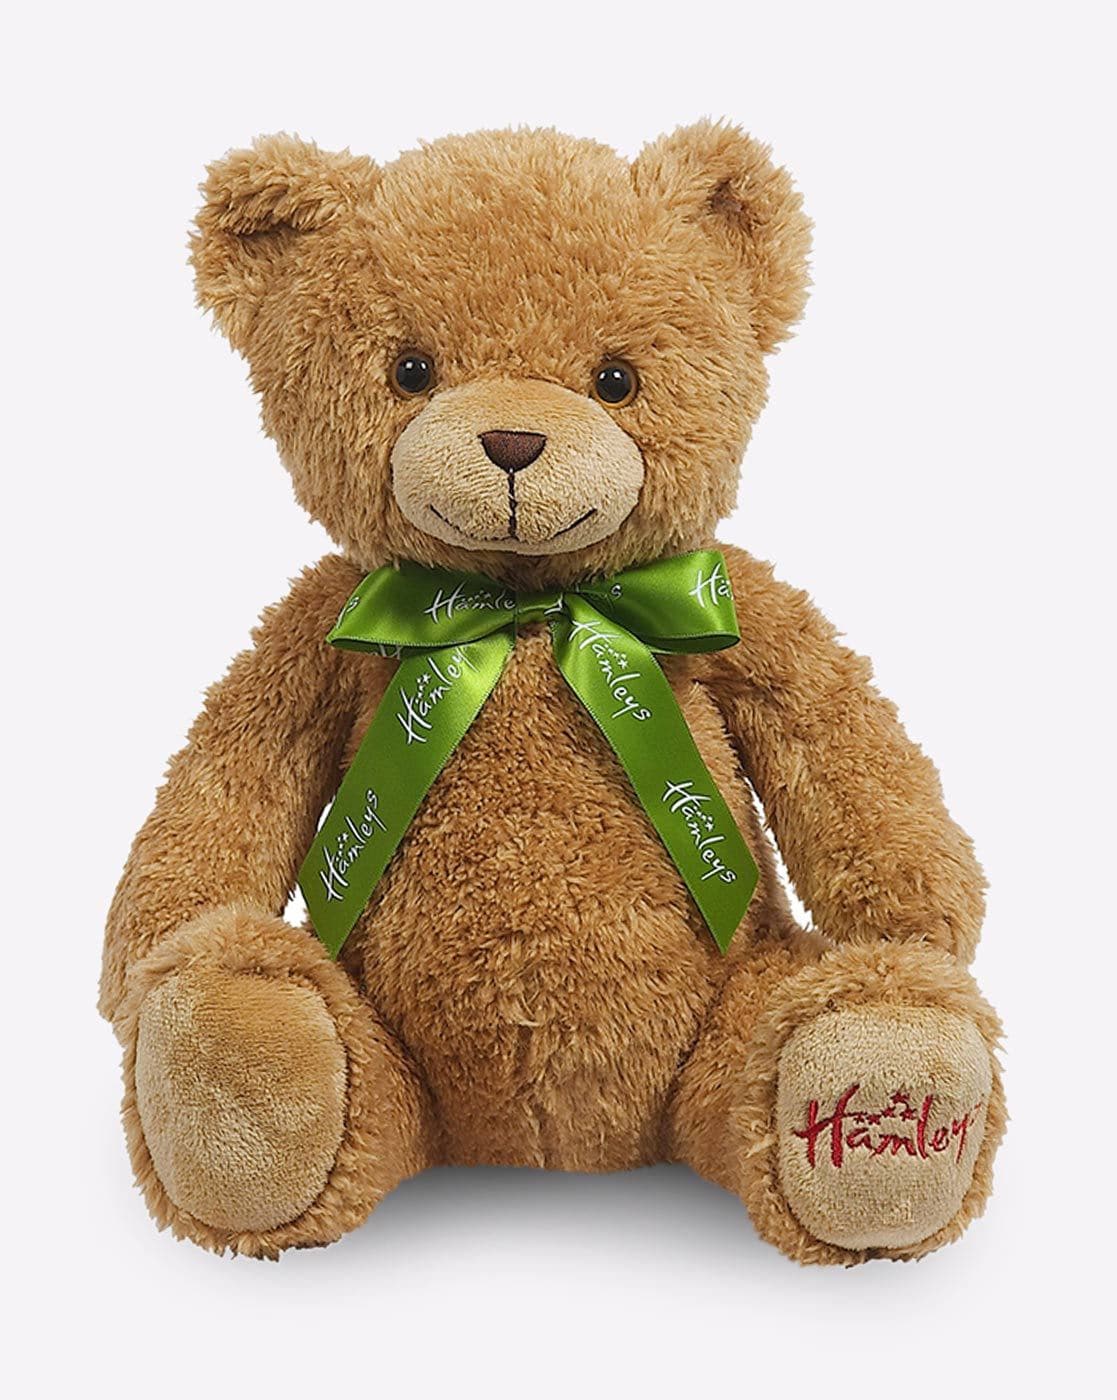 online shopping sites for teddy bears